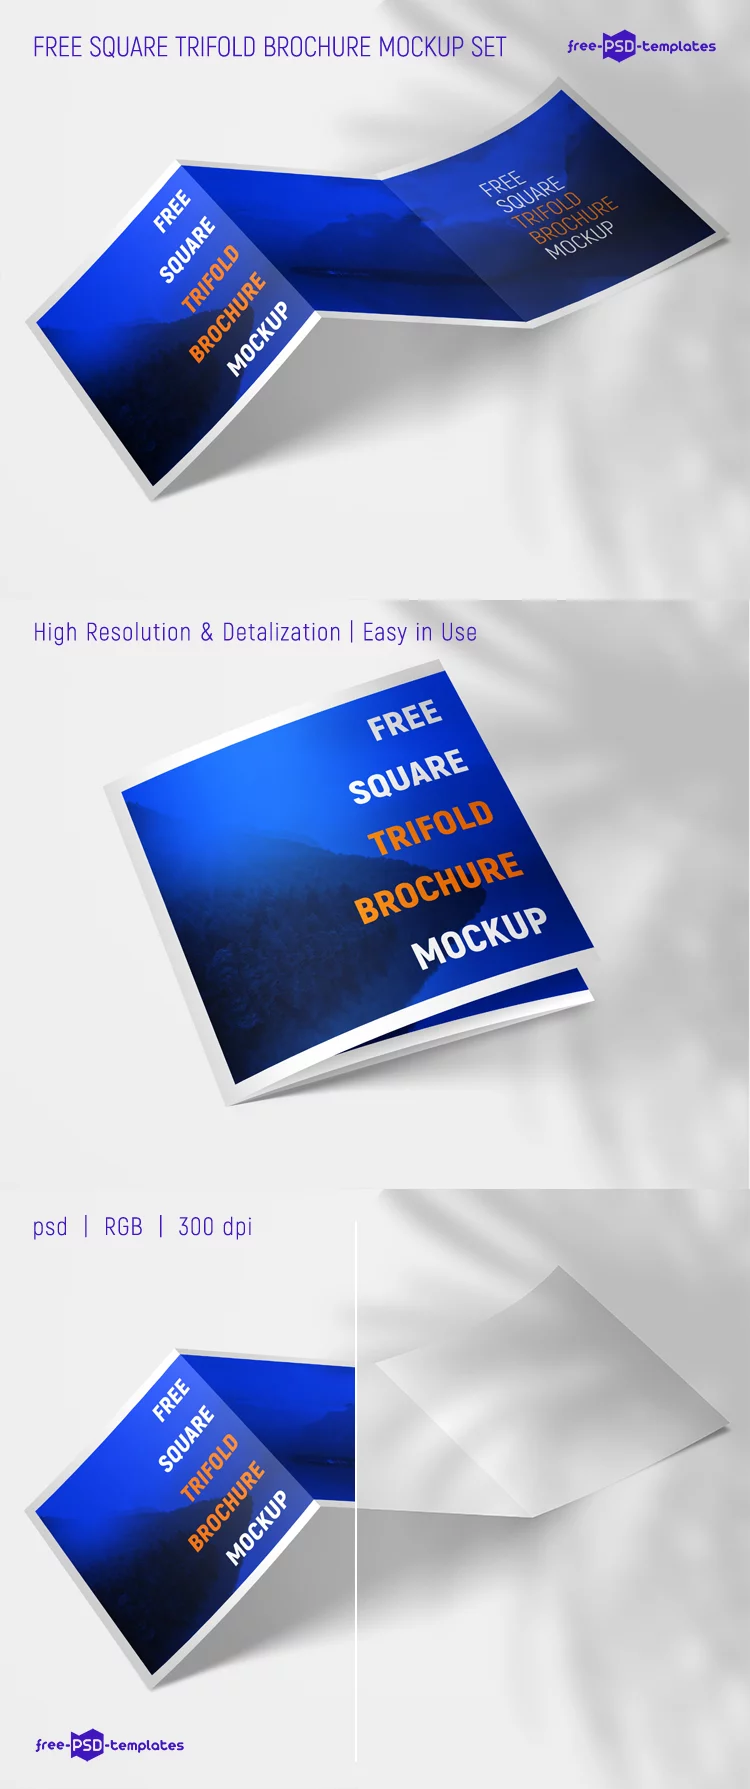 Free Square Trifold Brochure Mockup Set